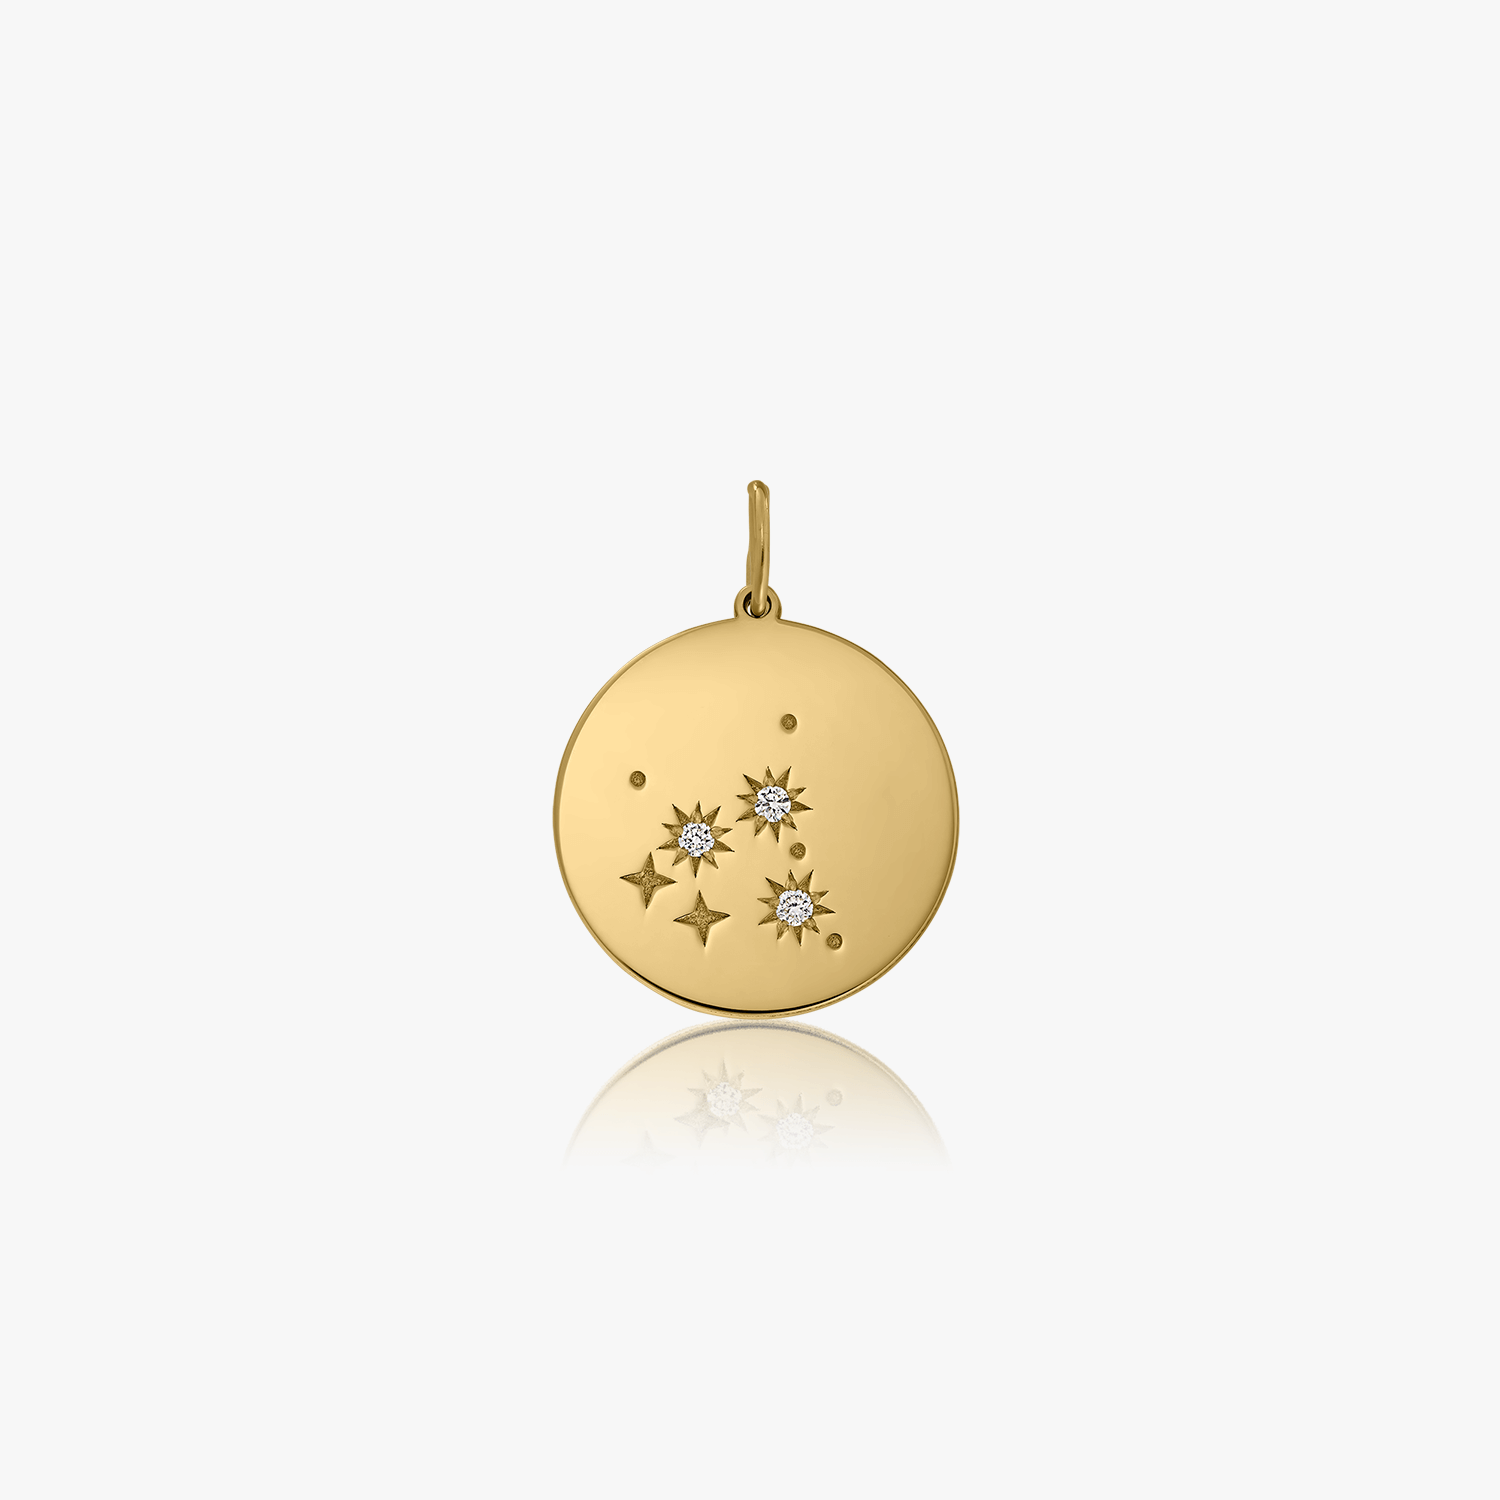 Zodiac - Sagittarius gold pendant